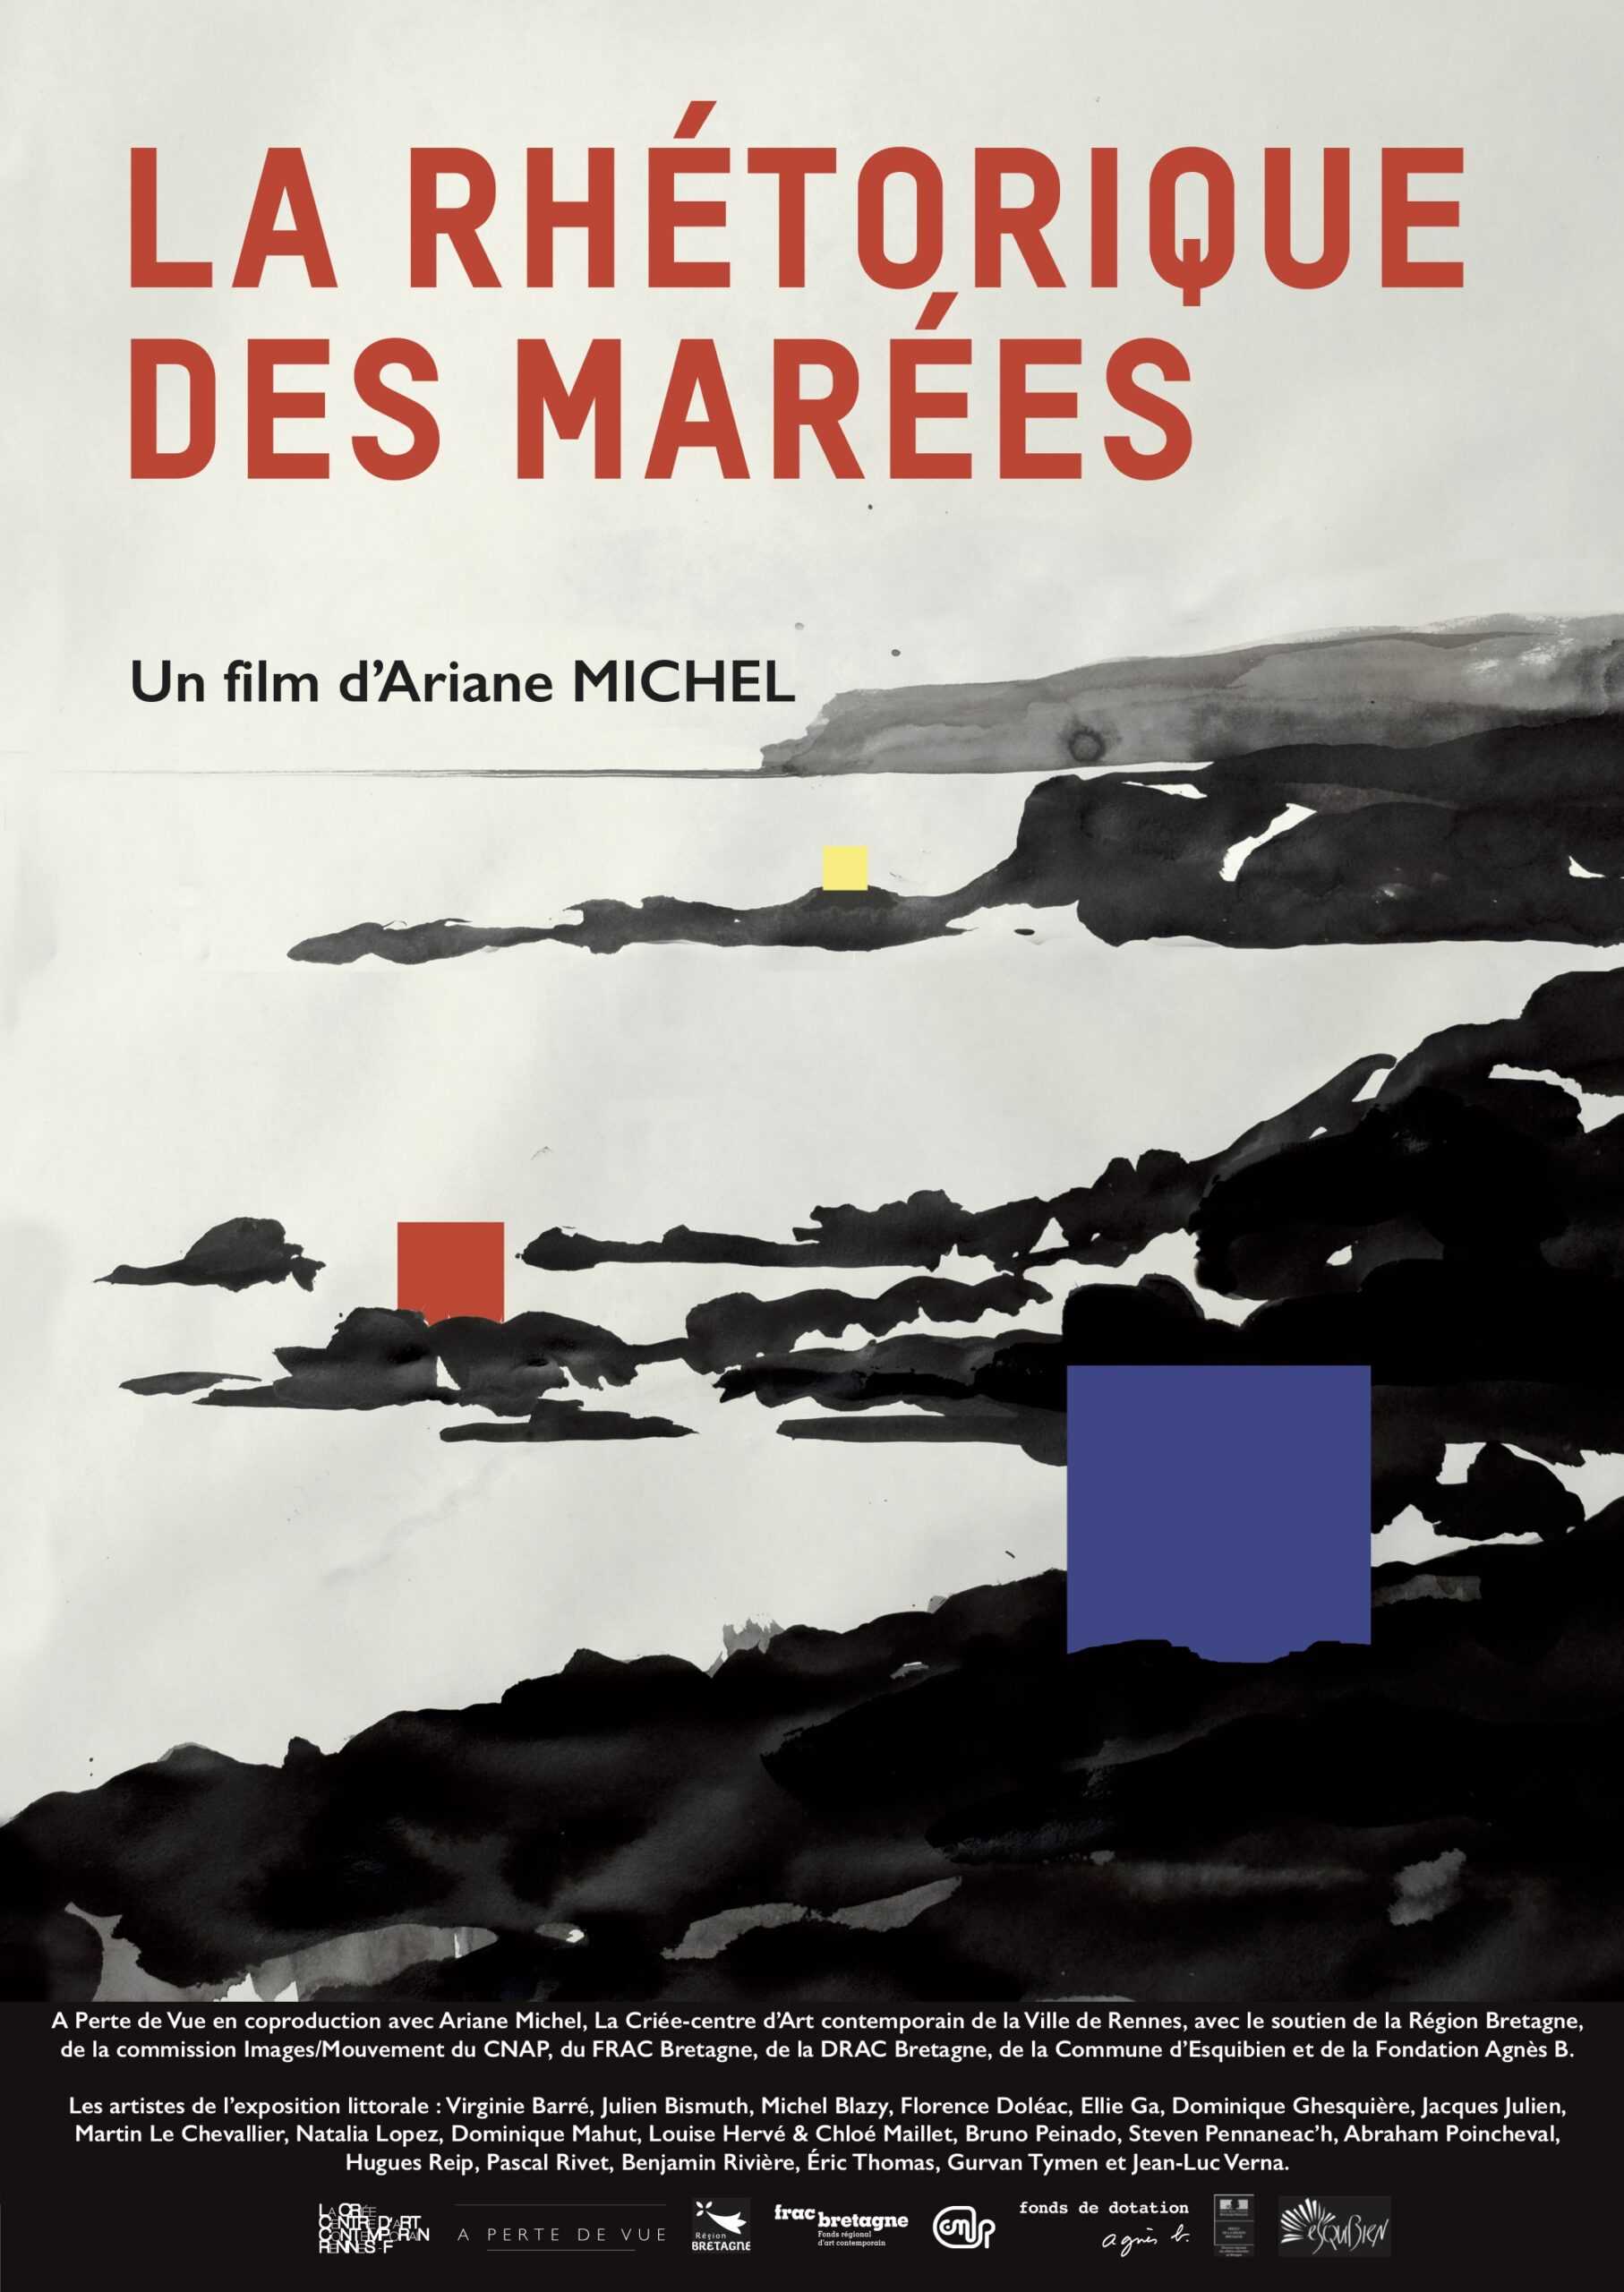 LA RHETORIQUE DES MAREES / Ariane MICHEL